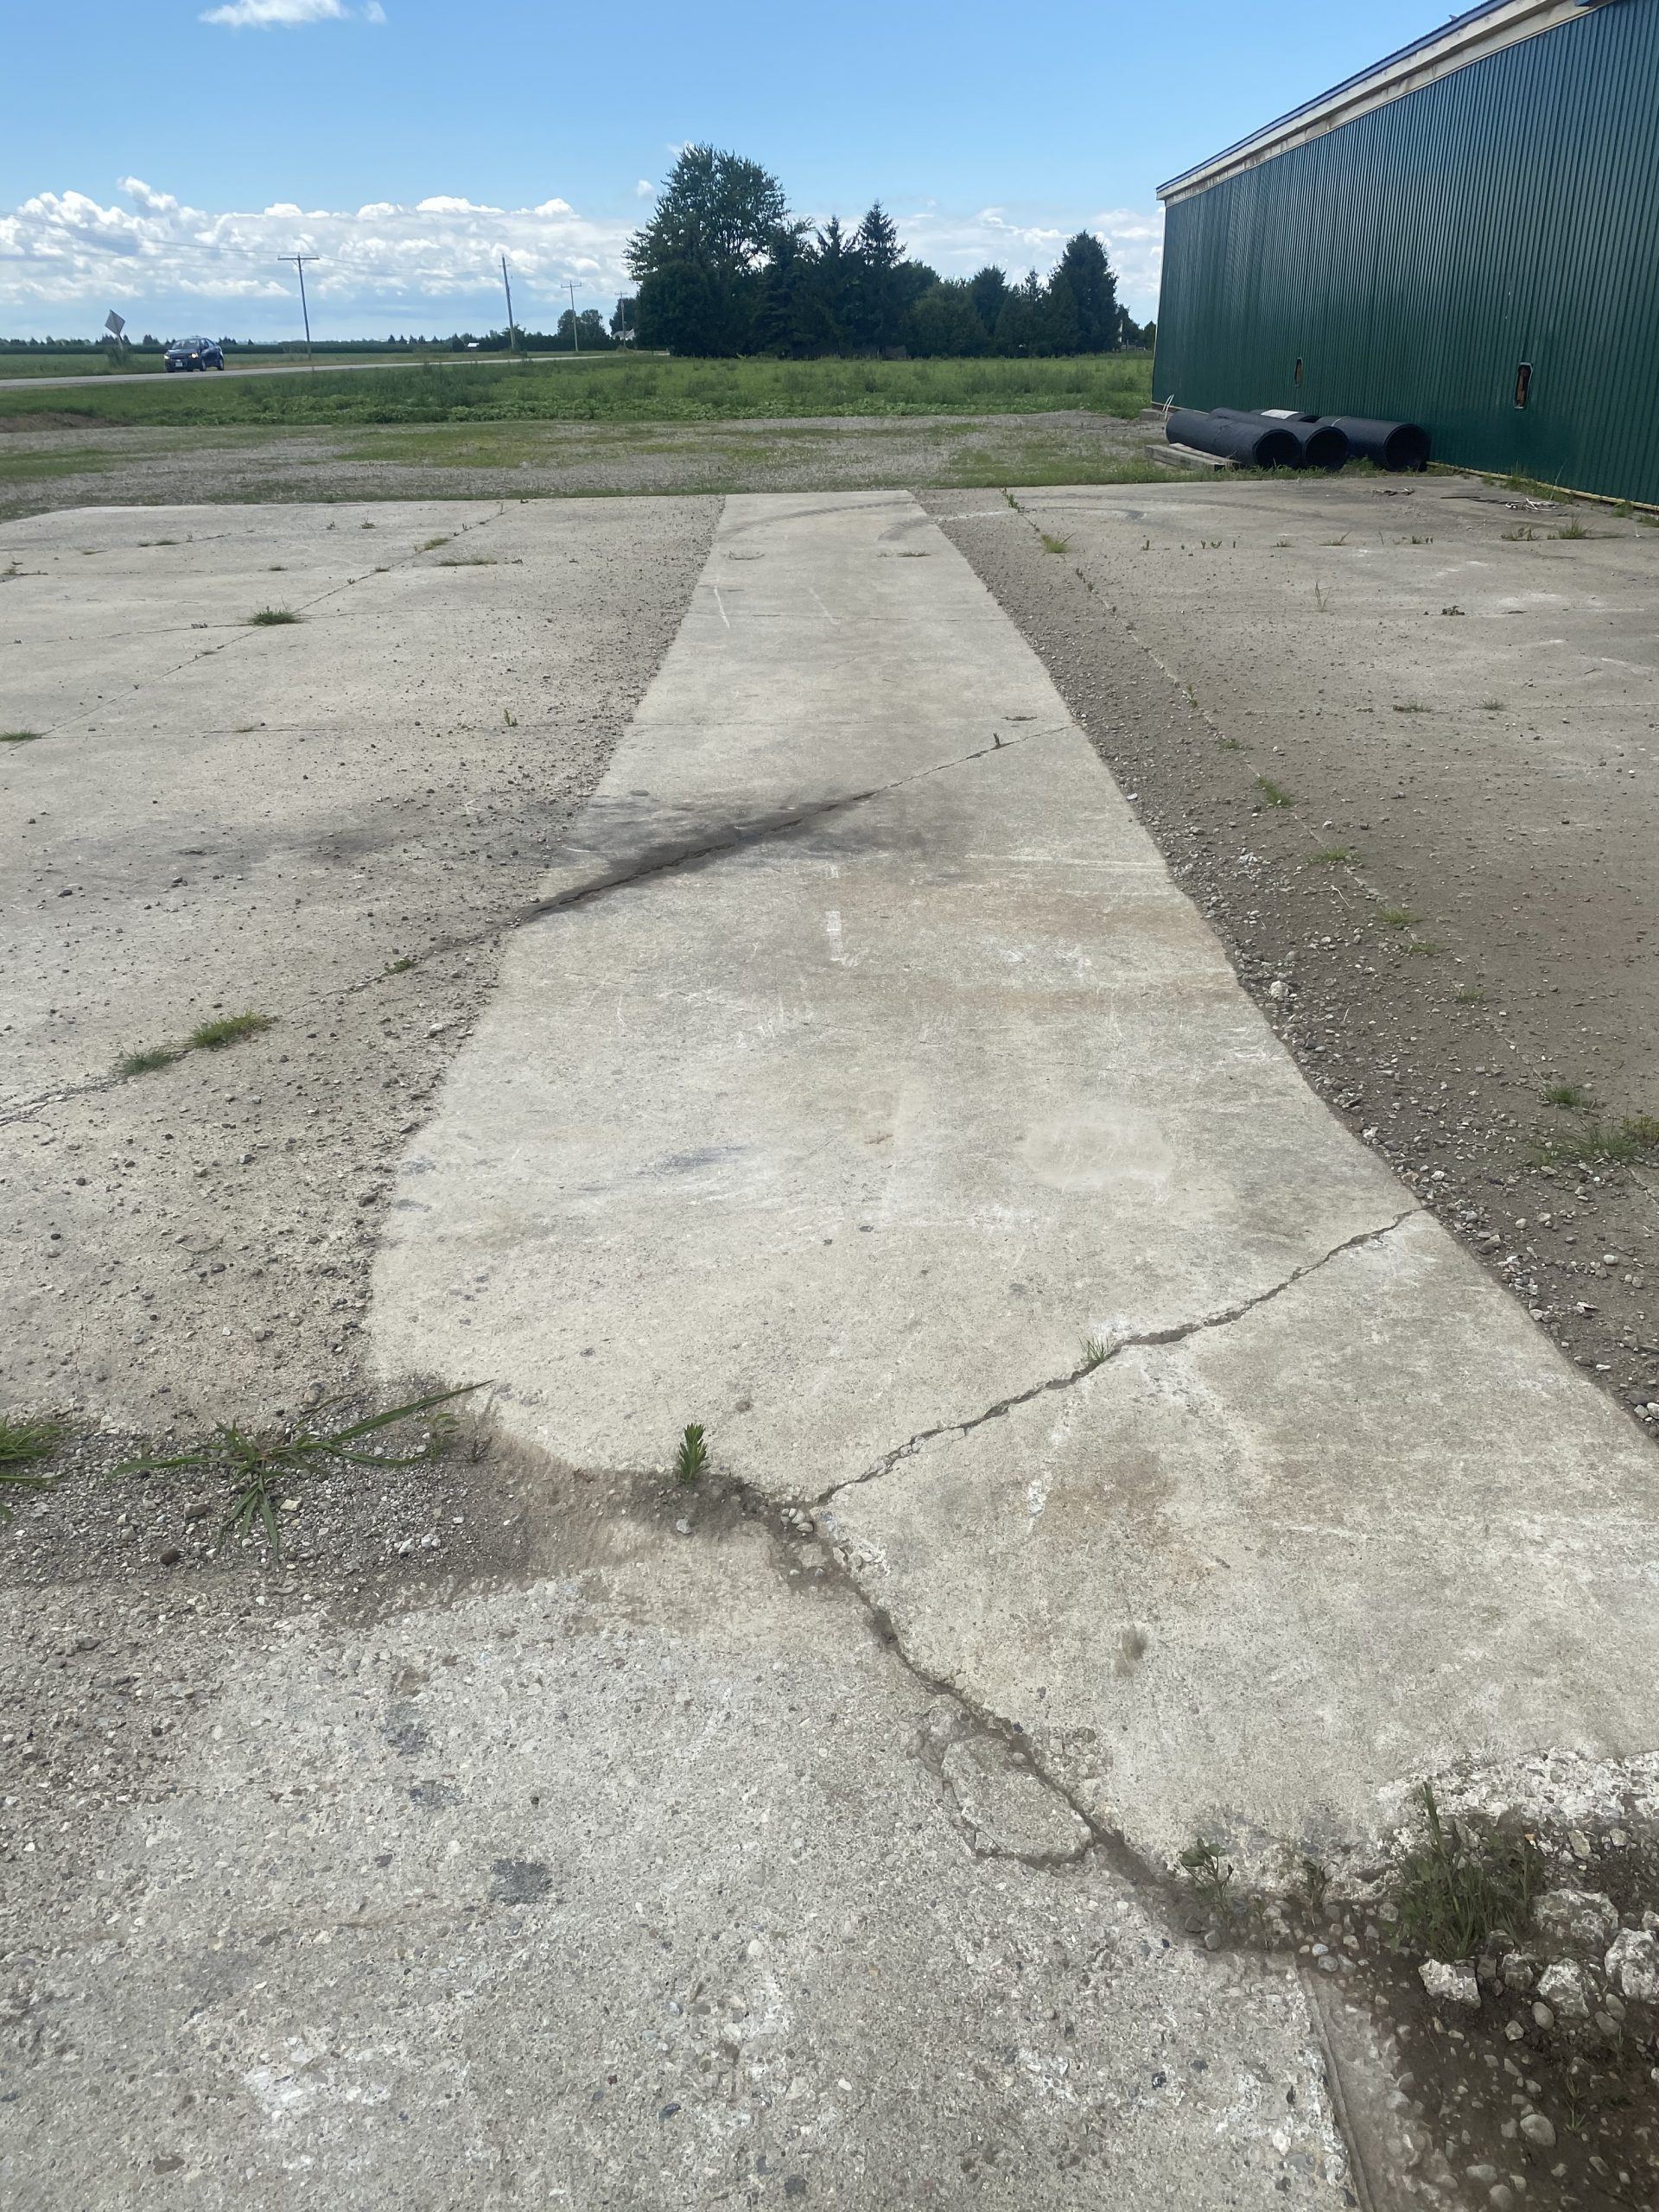 Area of concrete with cracks